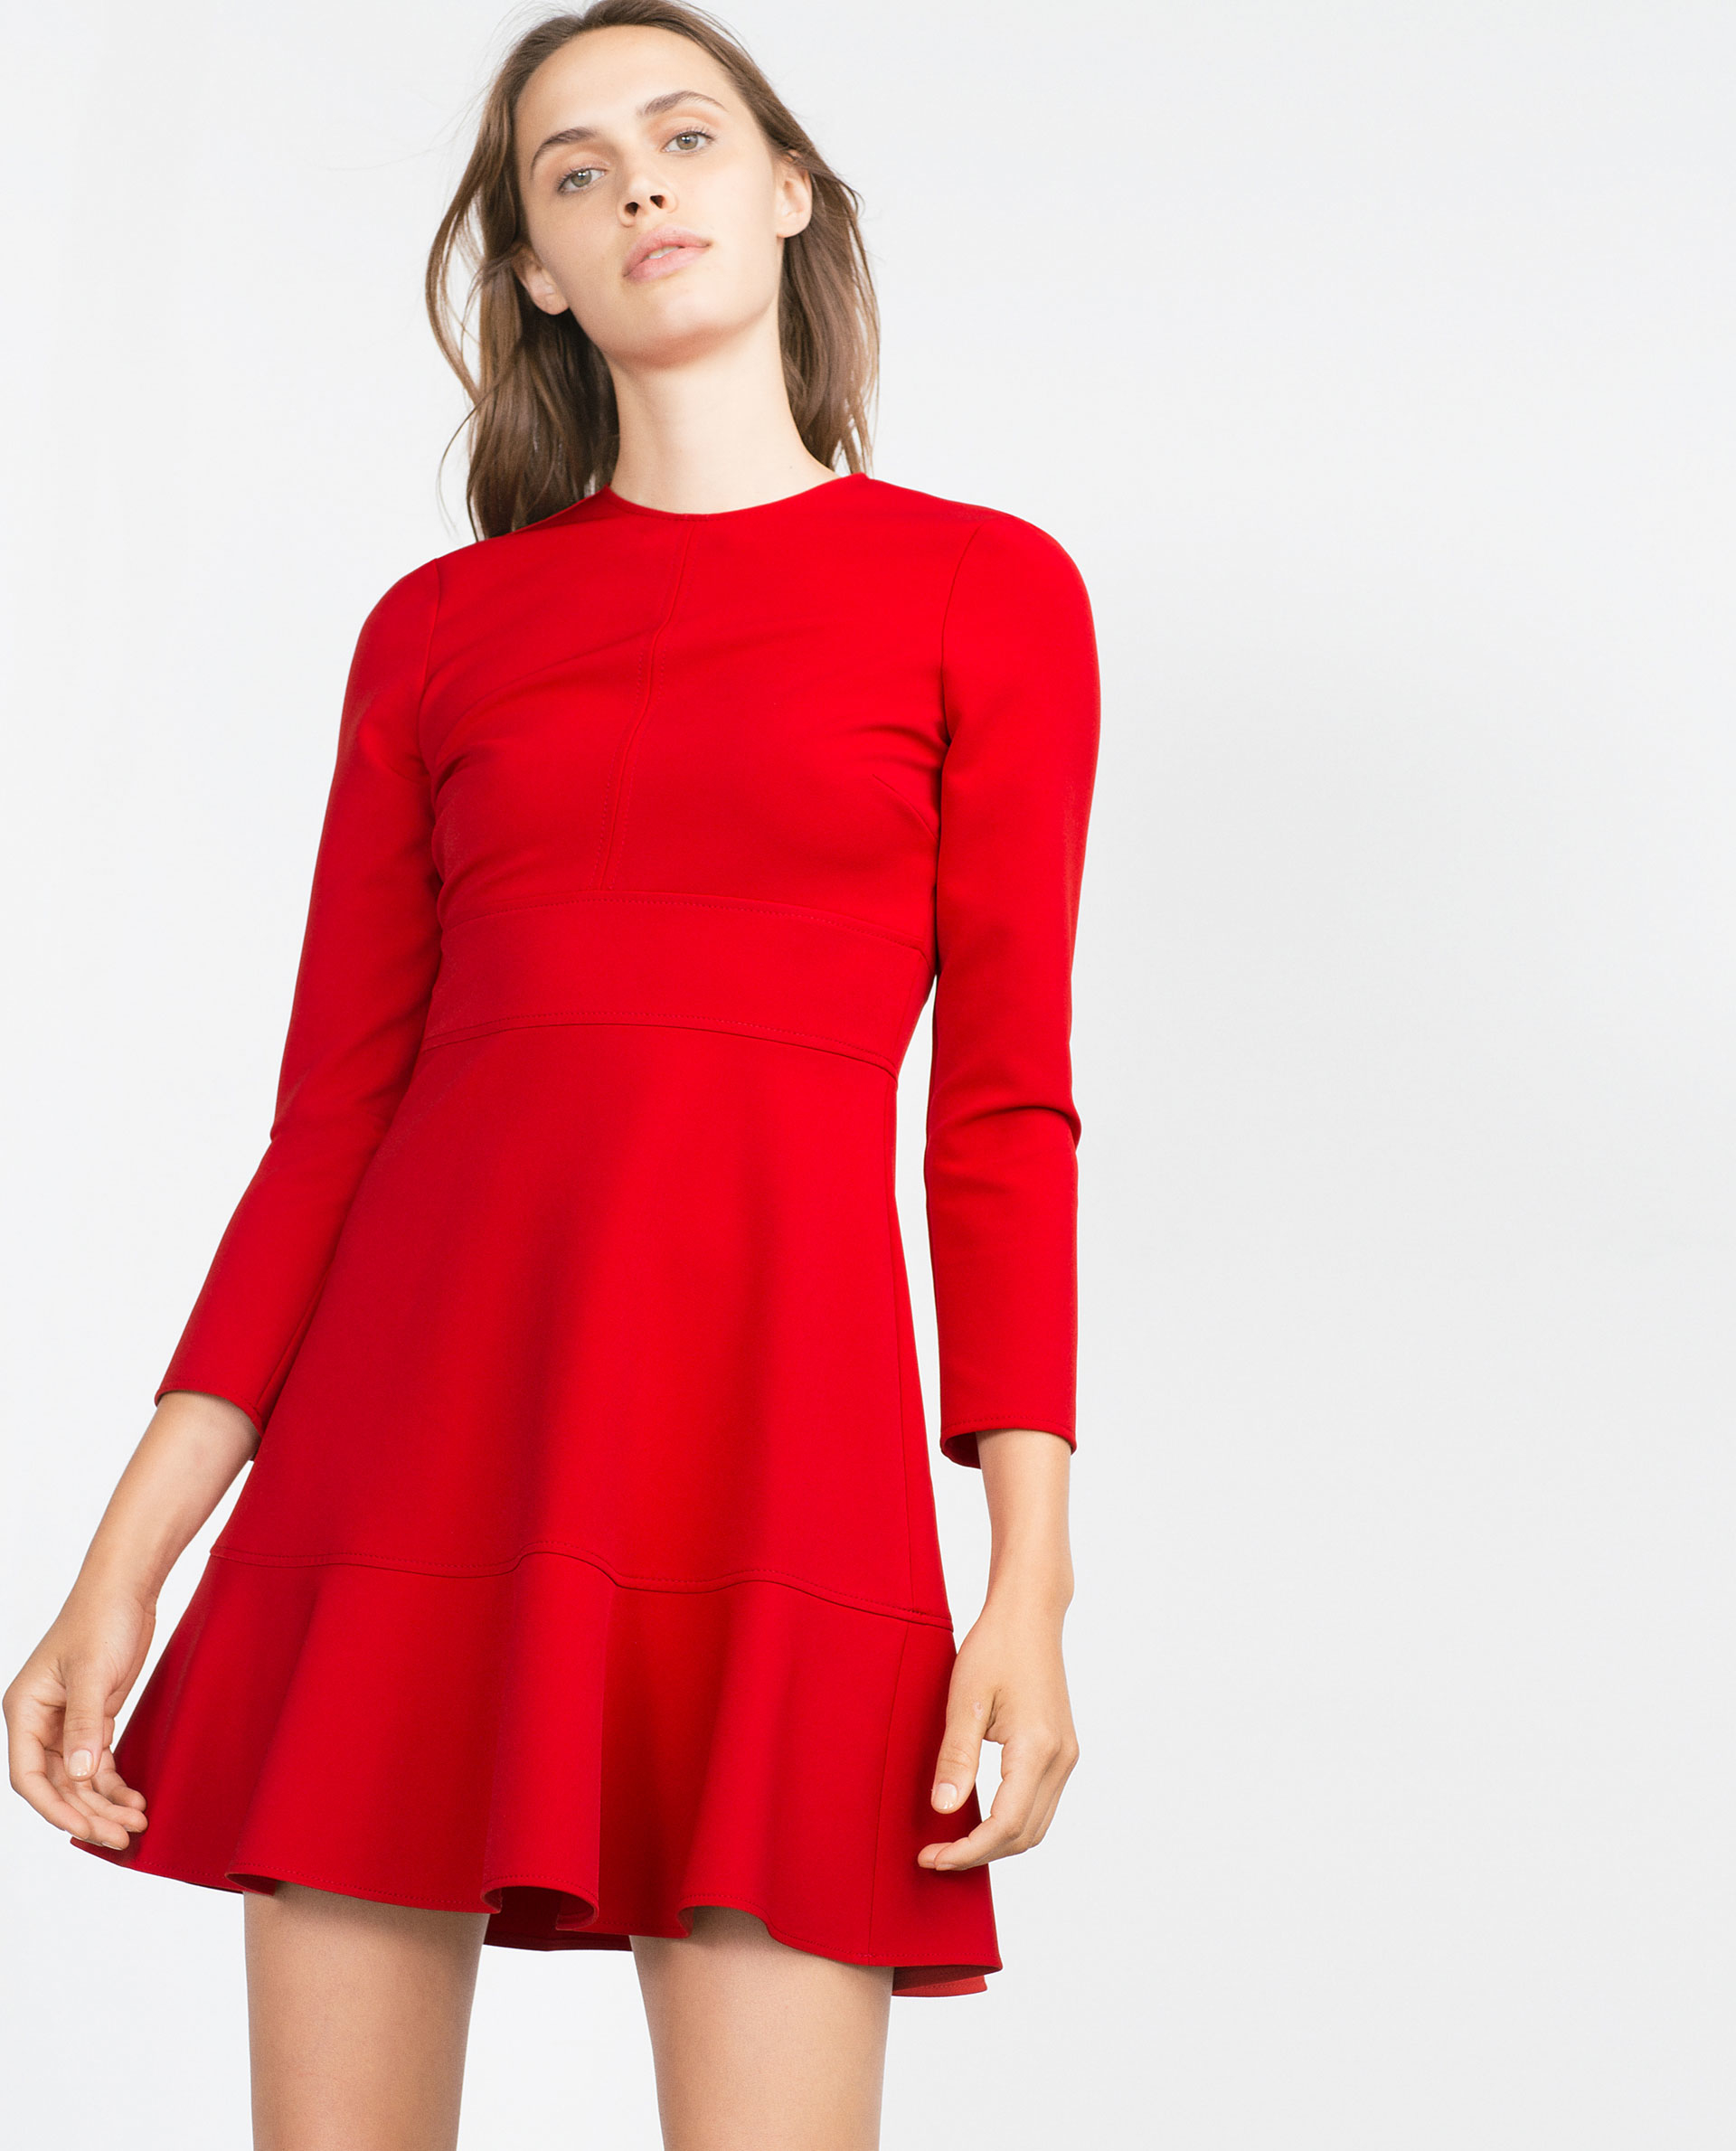  Zara  Skater Dress  in Red  Dark red  Lyst